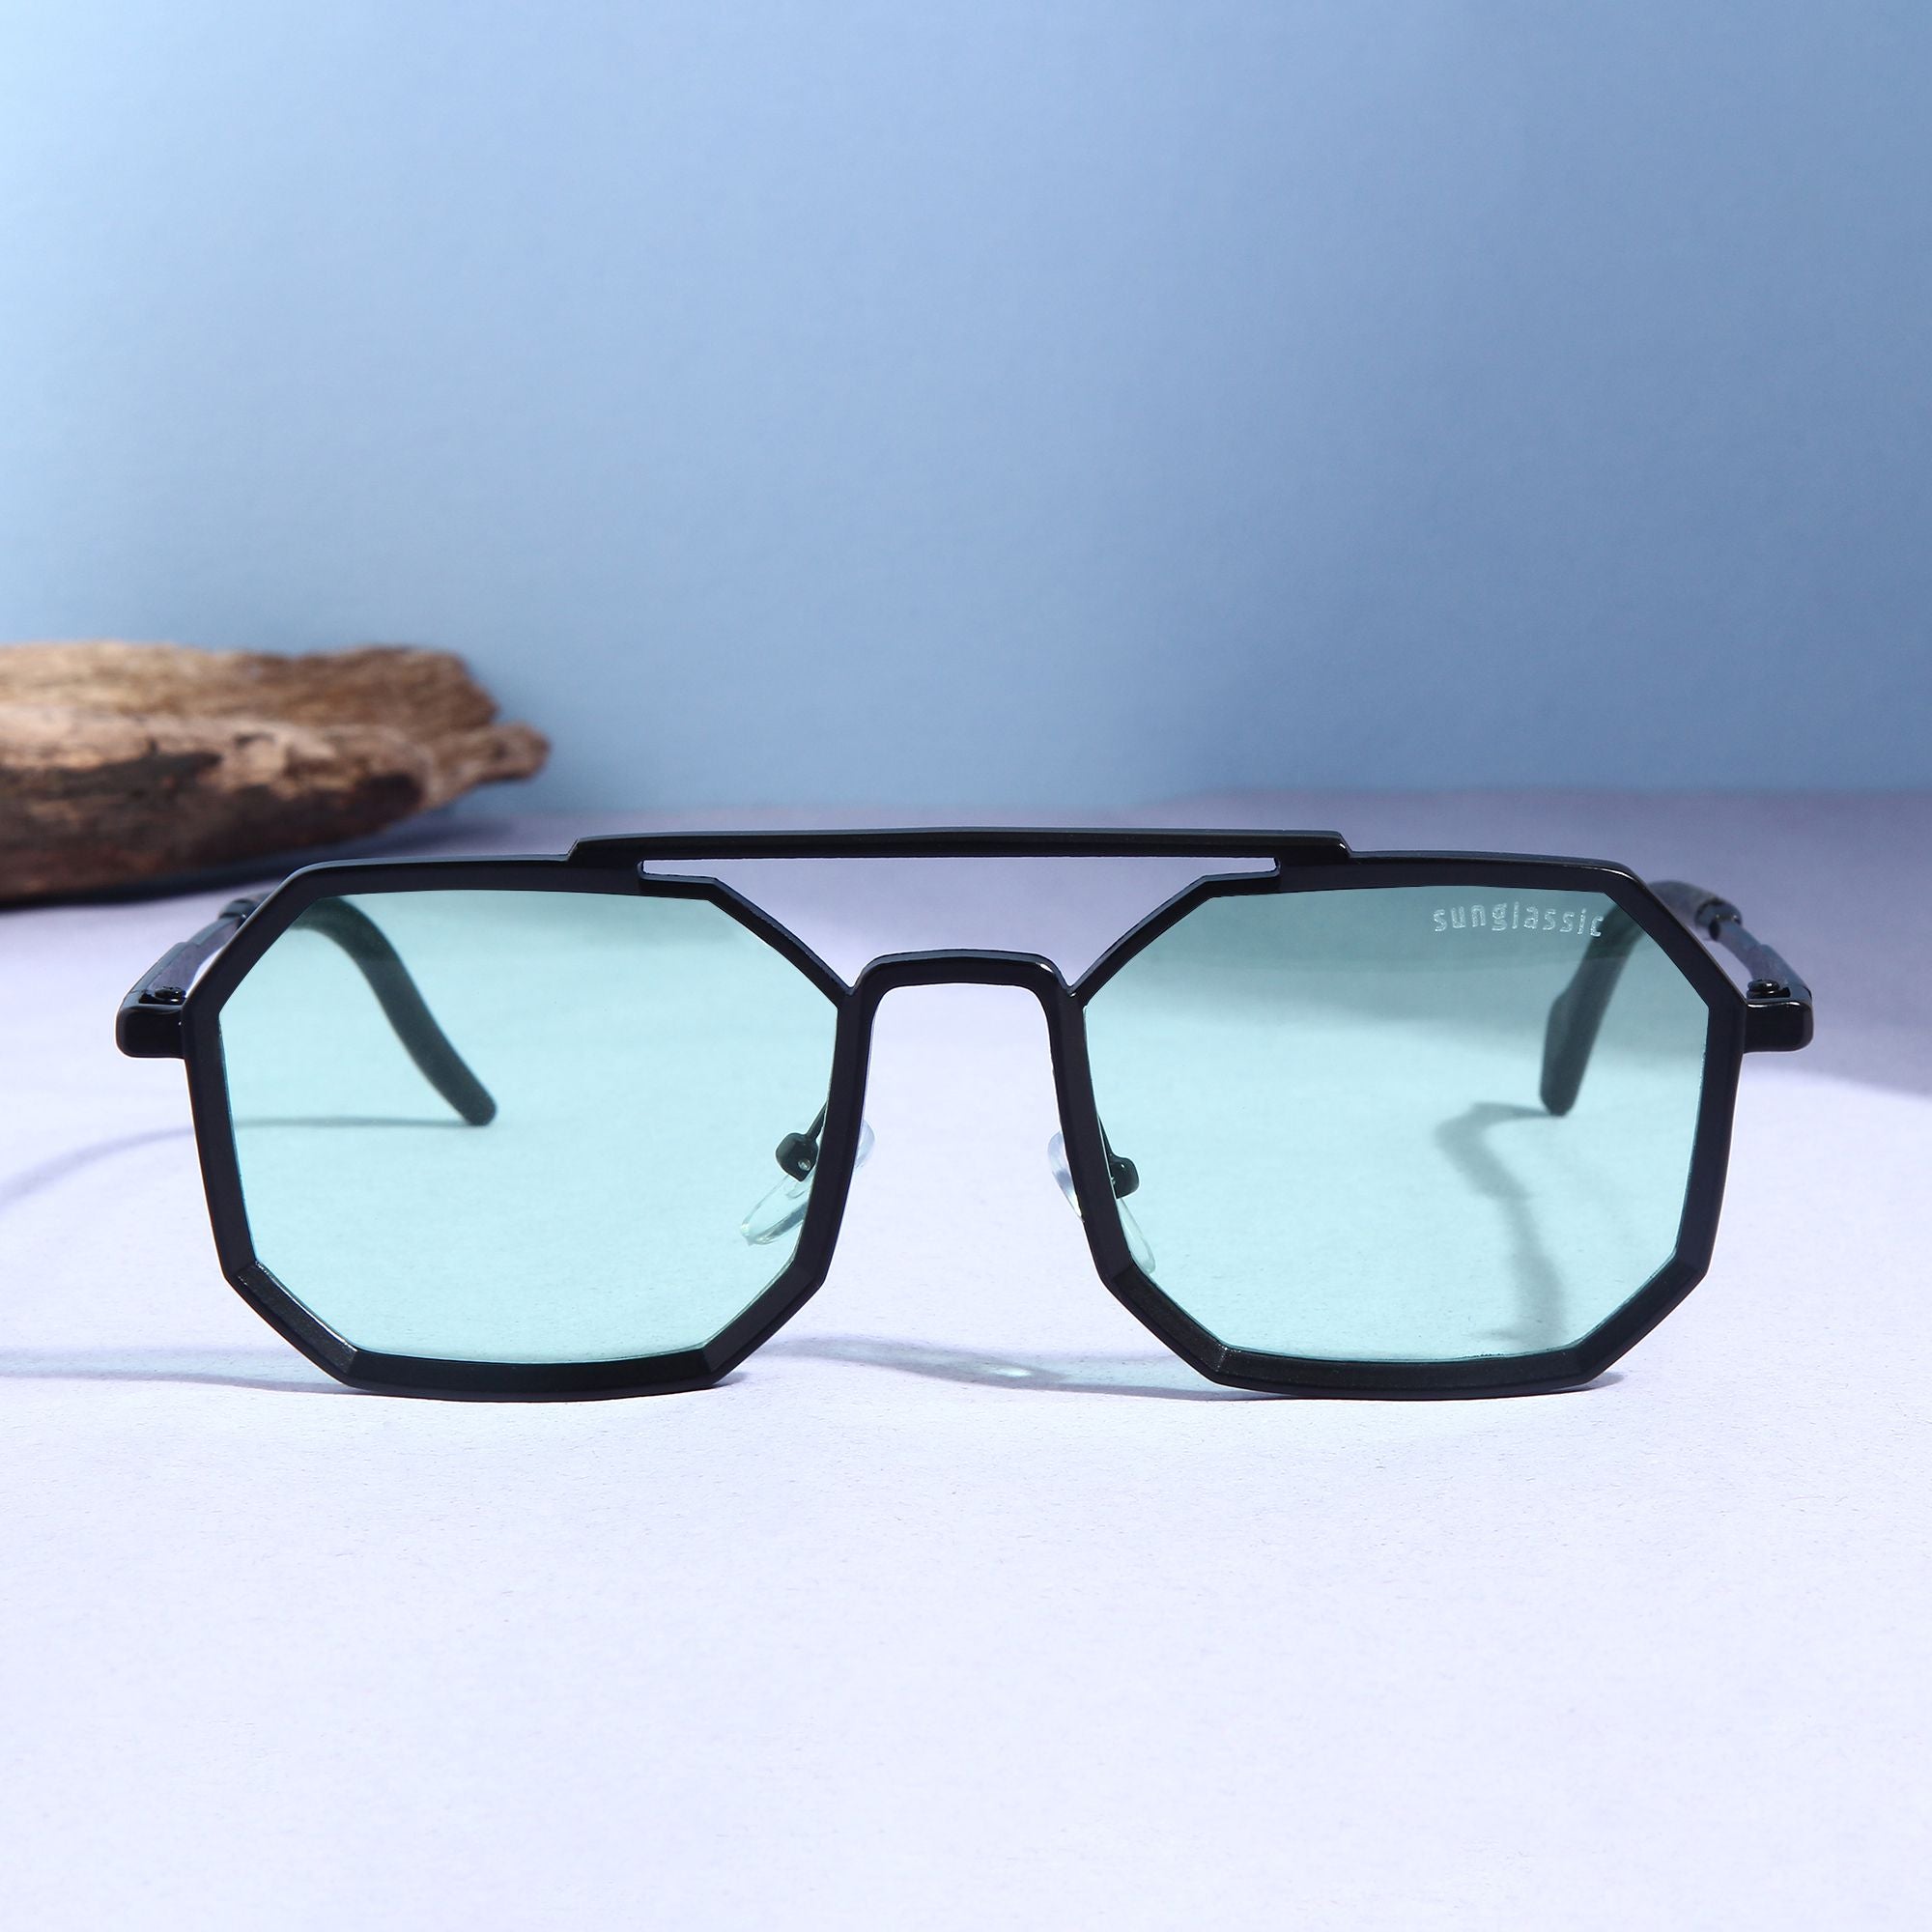 Stylish black sunglasses with green lenses.